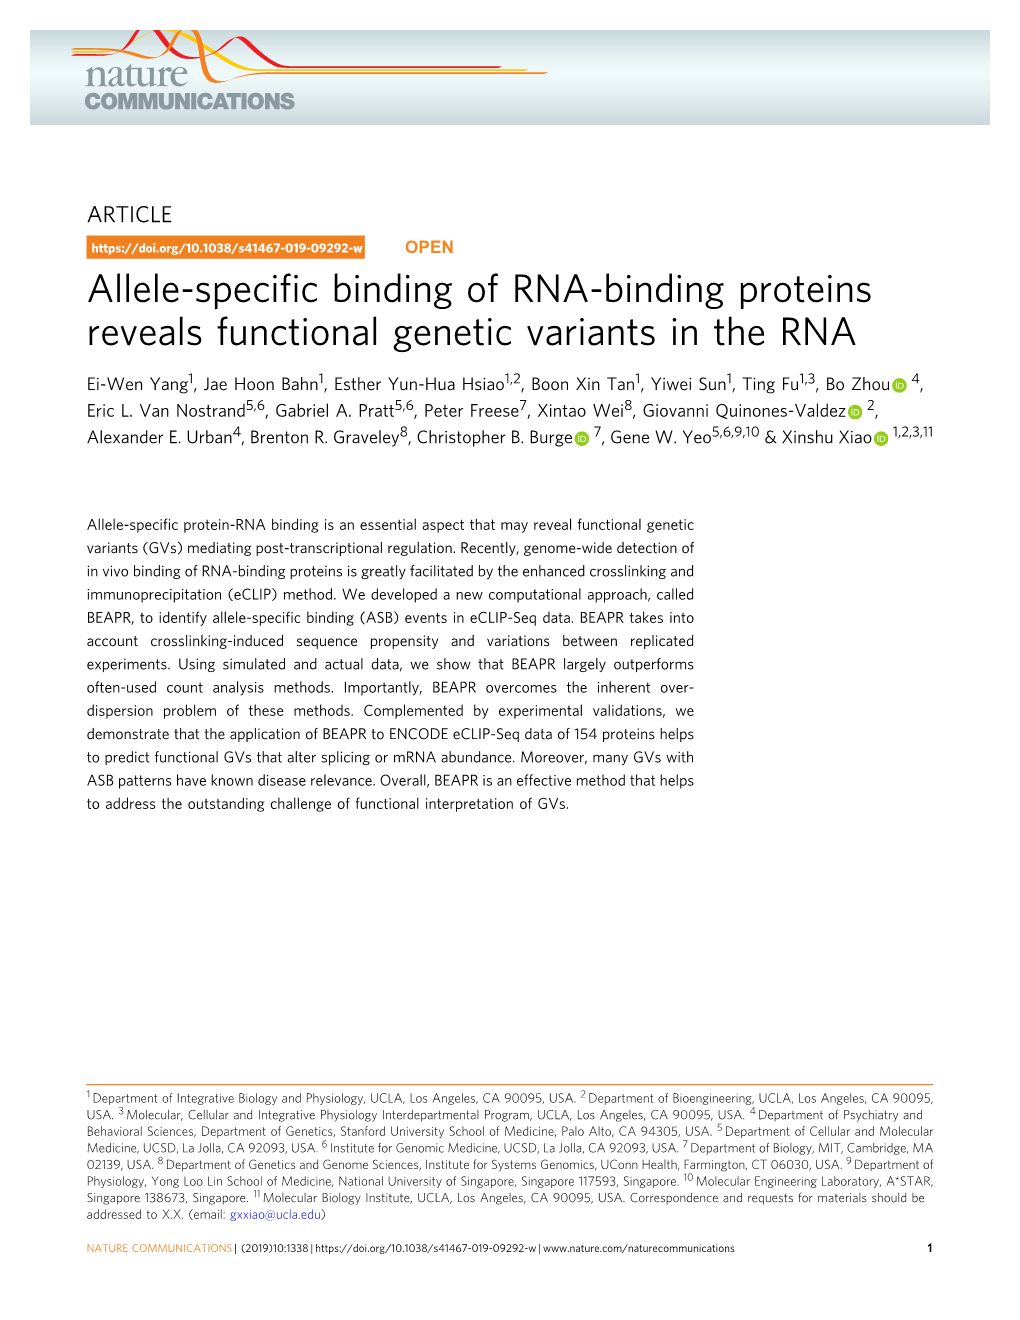 Allele-Specific Binding of RNA-Binding Proteins Reveals